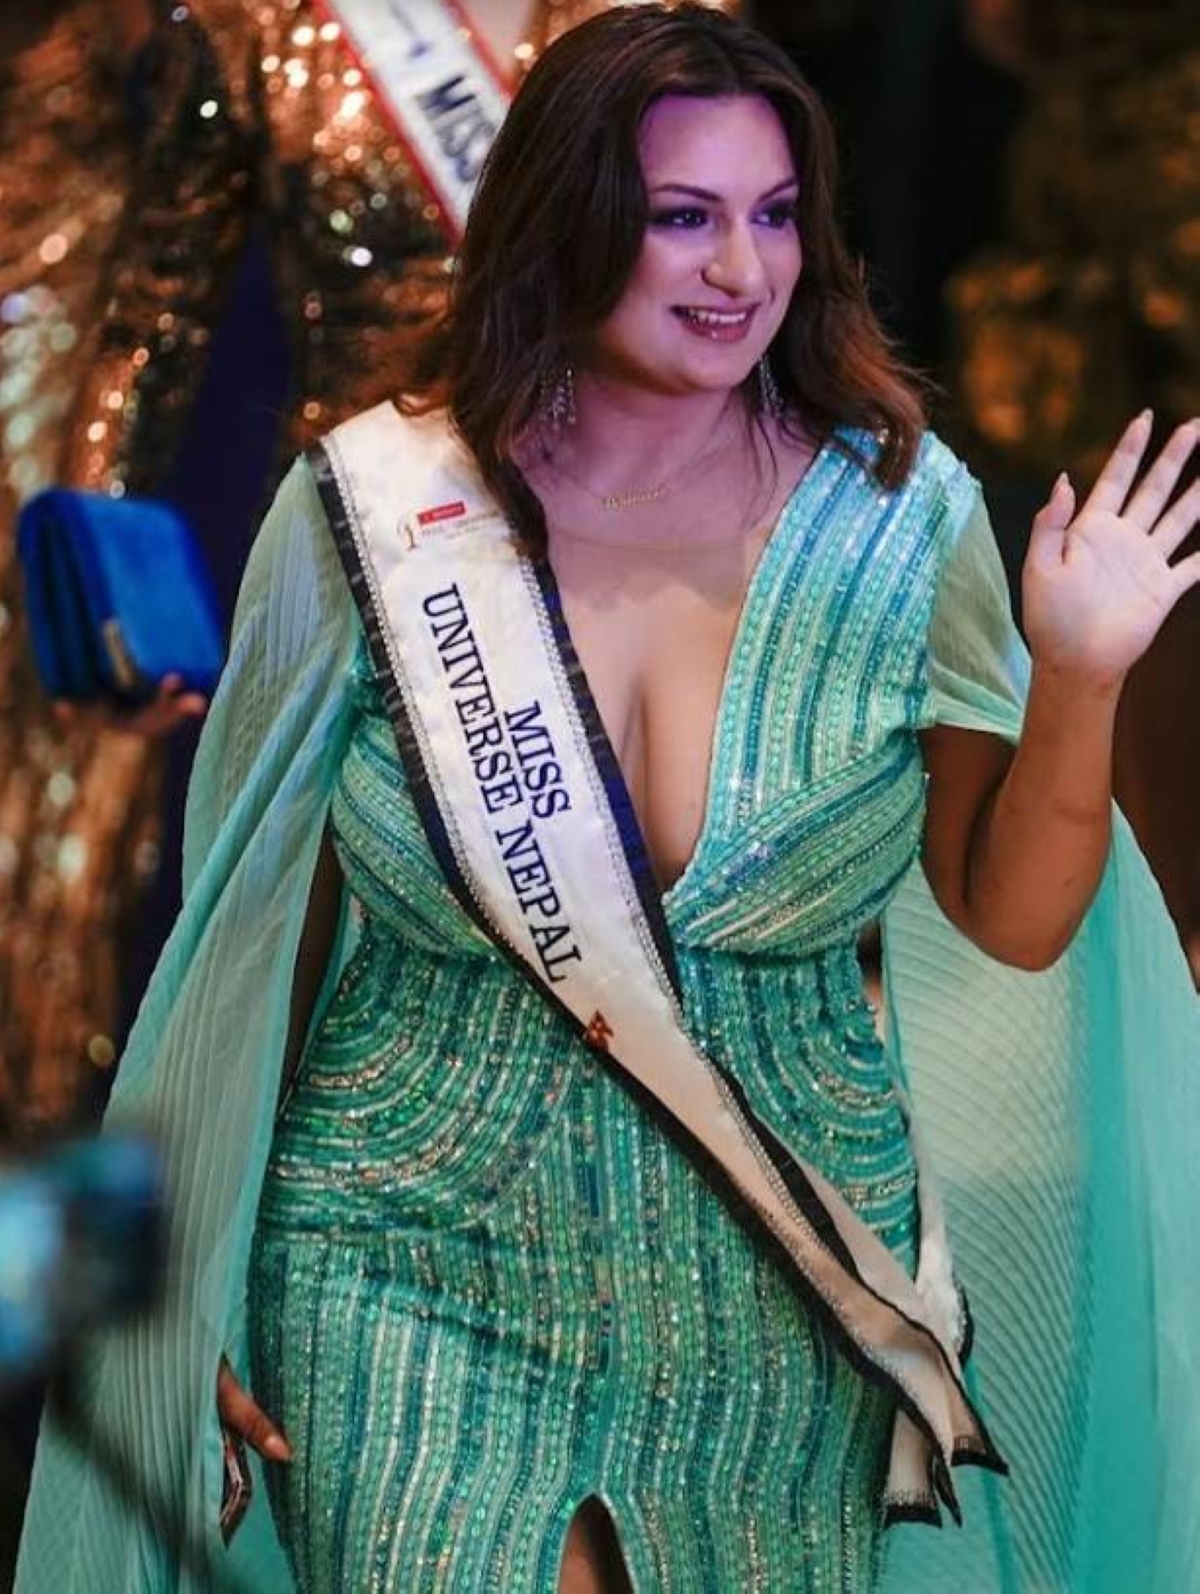 An inclusive Miss Universe coronation unfolds